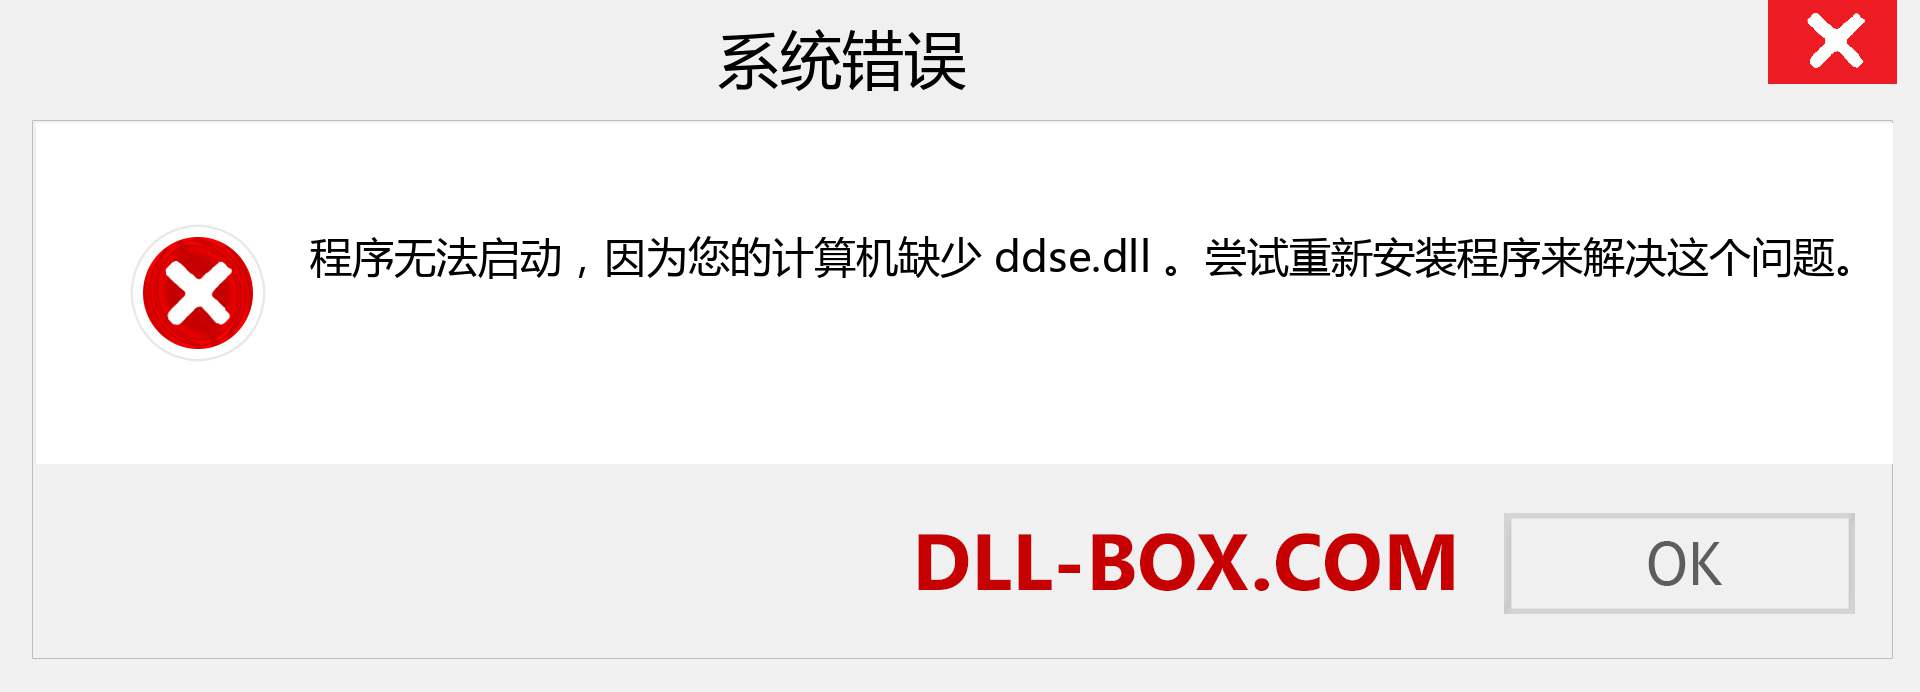 ddse.dll 文件丢失？。 适用于 Windows 7、8、10 的下载 - 修复 Windows、照片、图像上的 ddse dll 丢失错误